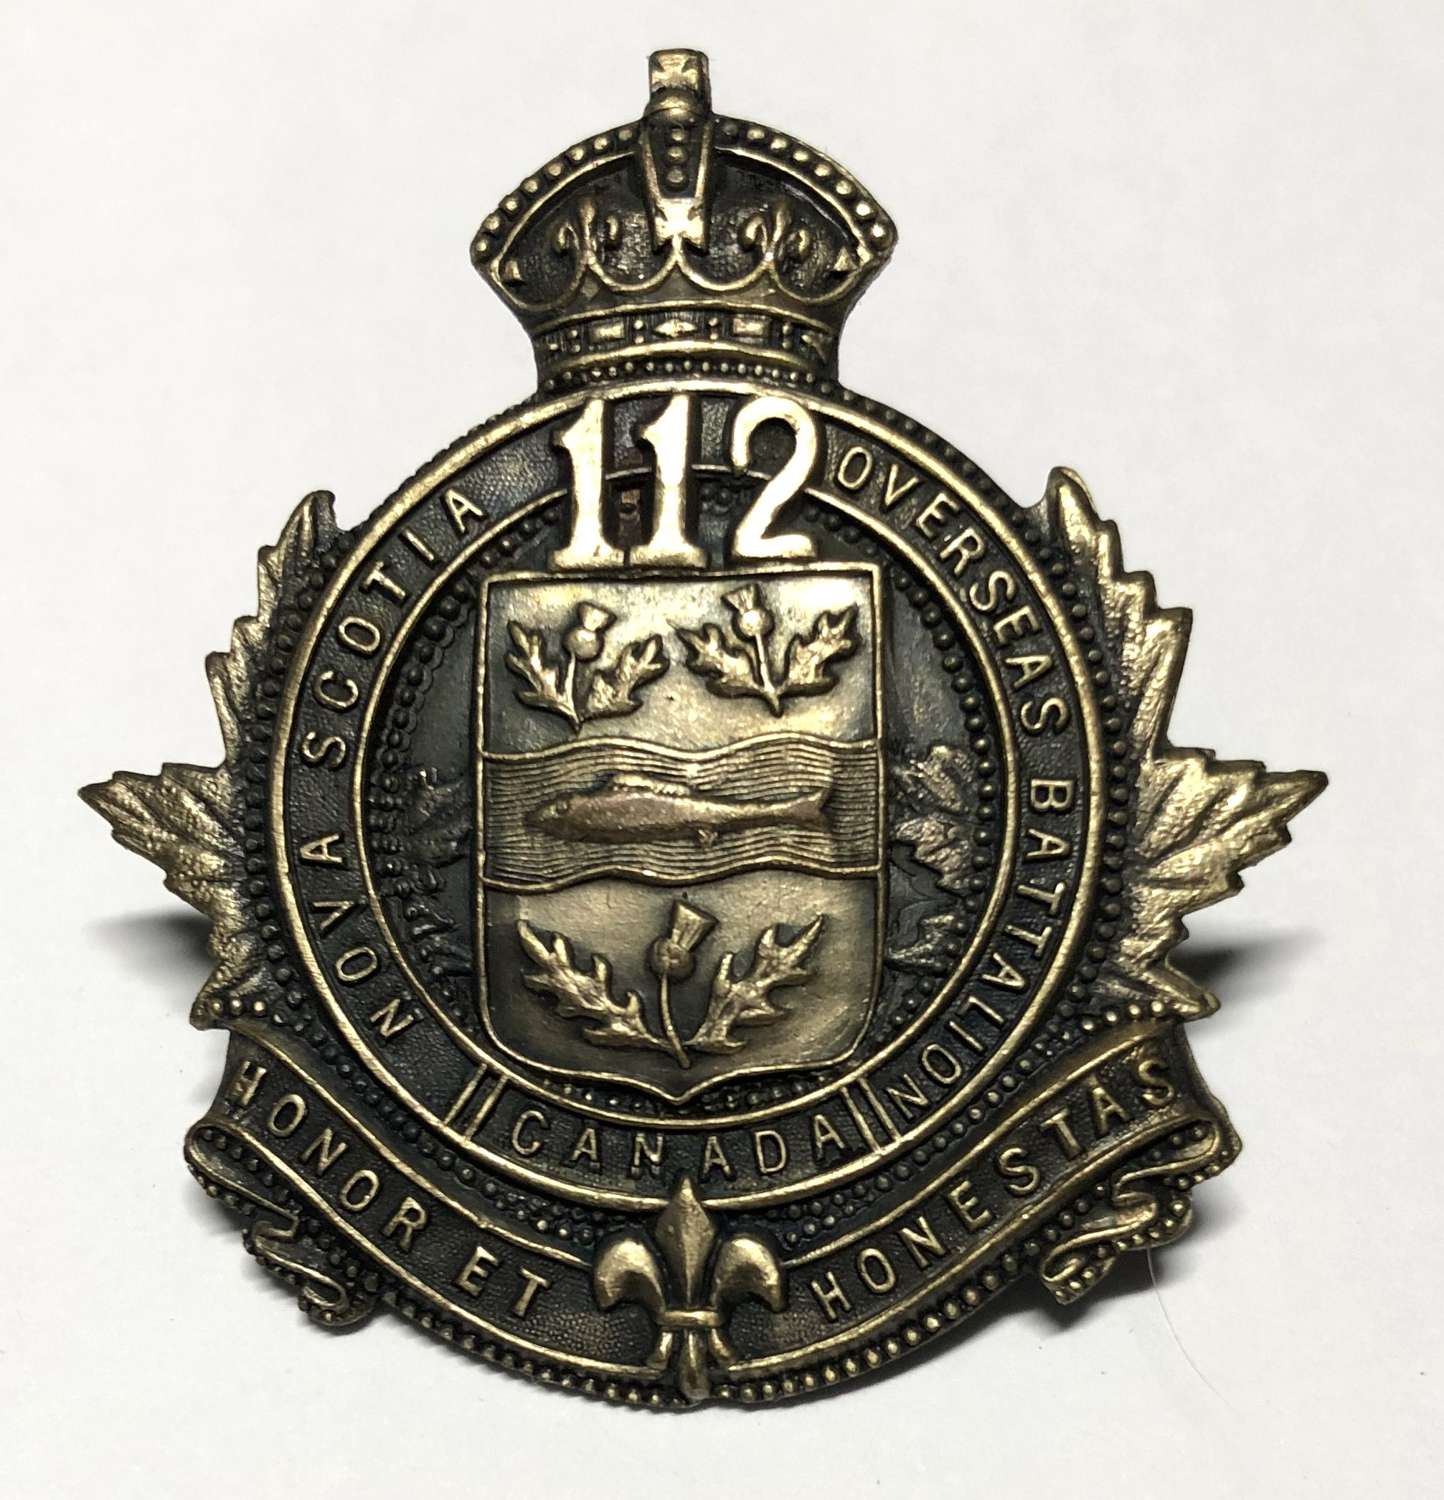 Canada 112nd Battalion (Windsor, Nova Scotia) CEF WW1 cap badge